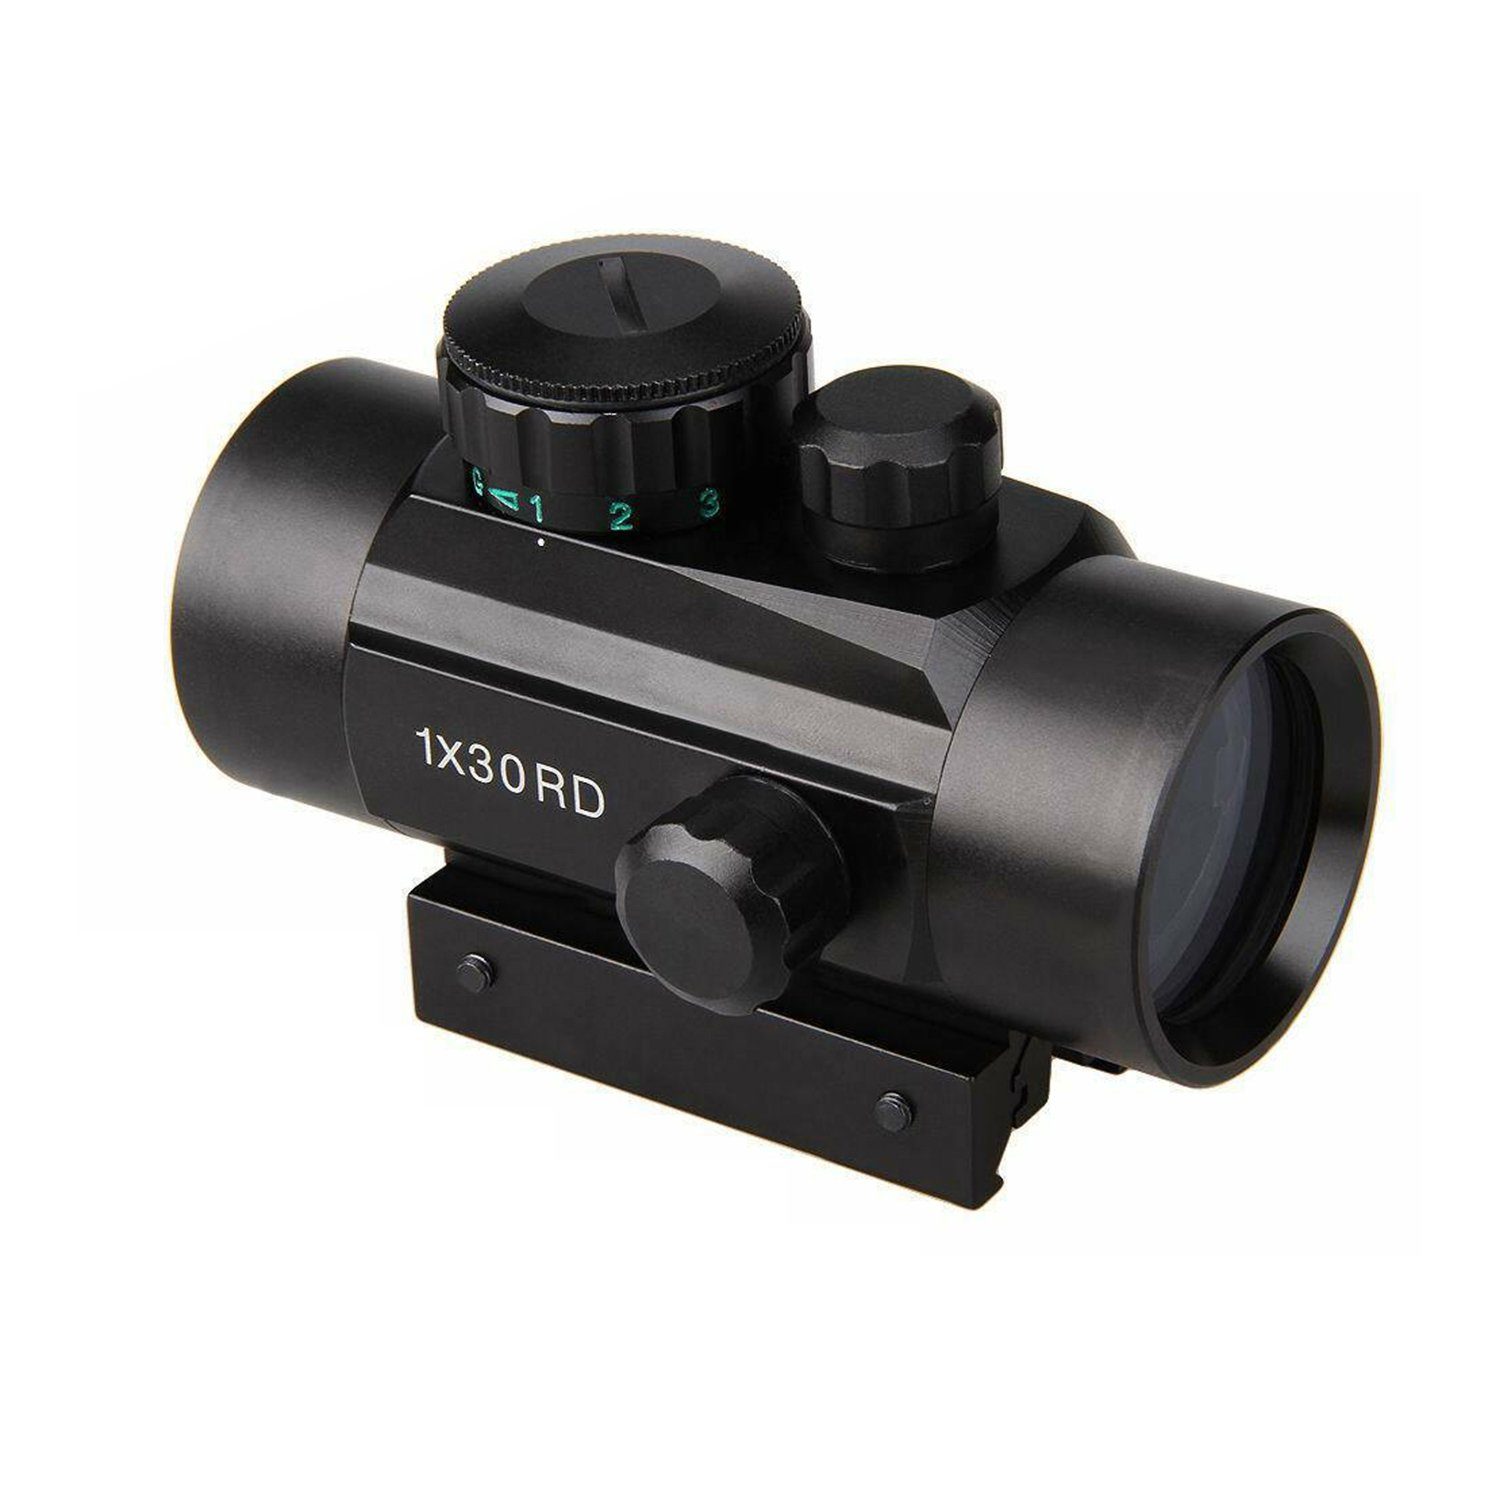 Zielfernrohr 50-100m Holographic Armbrust Riflescope Grün Punkt Anblick Dot 